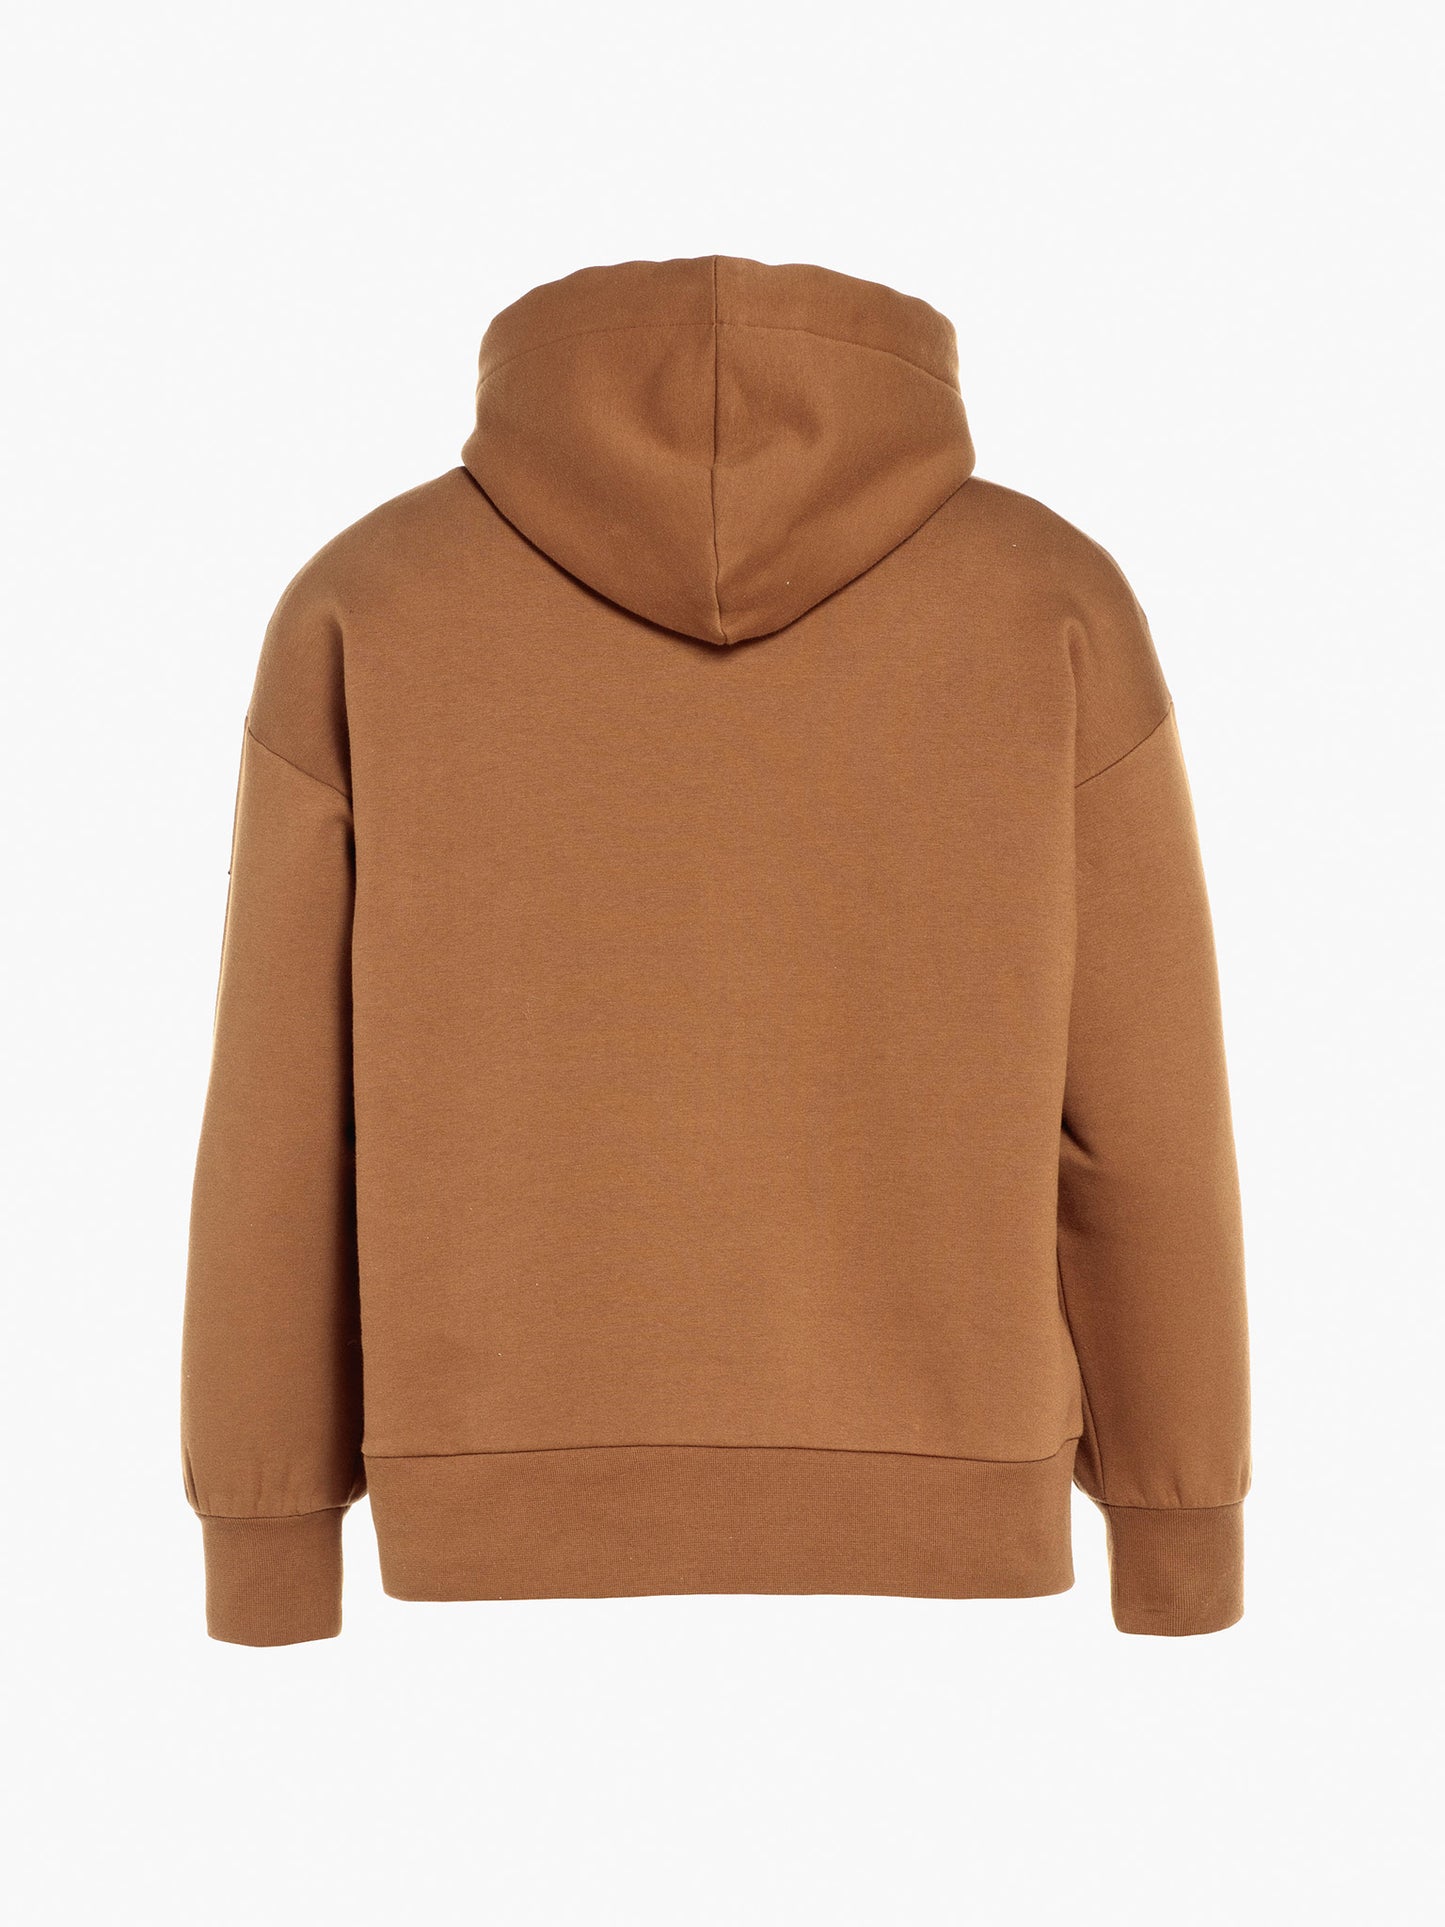 HARVARD hooded sweater